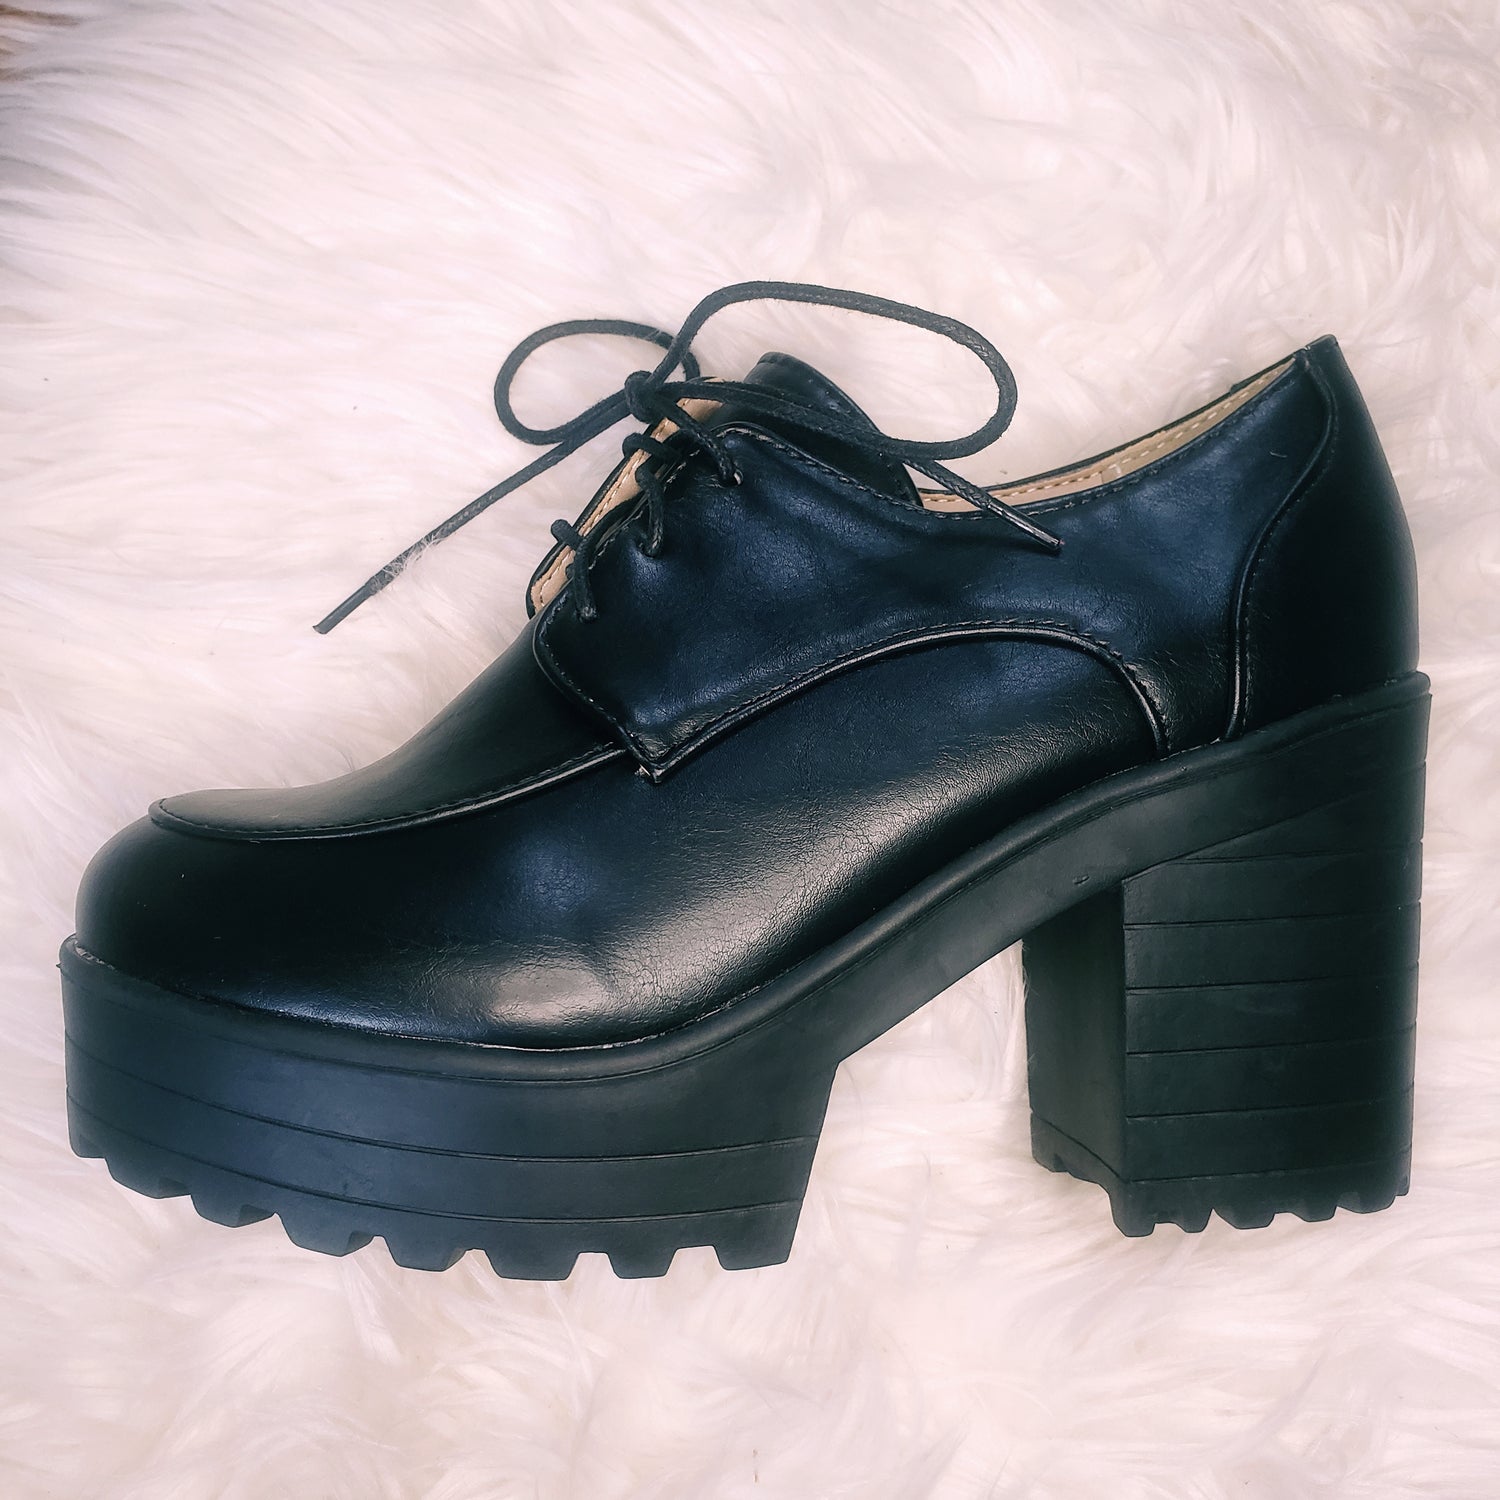 Black retro 70's disco shoes, platform chunky oxford heels.